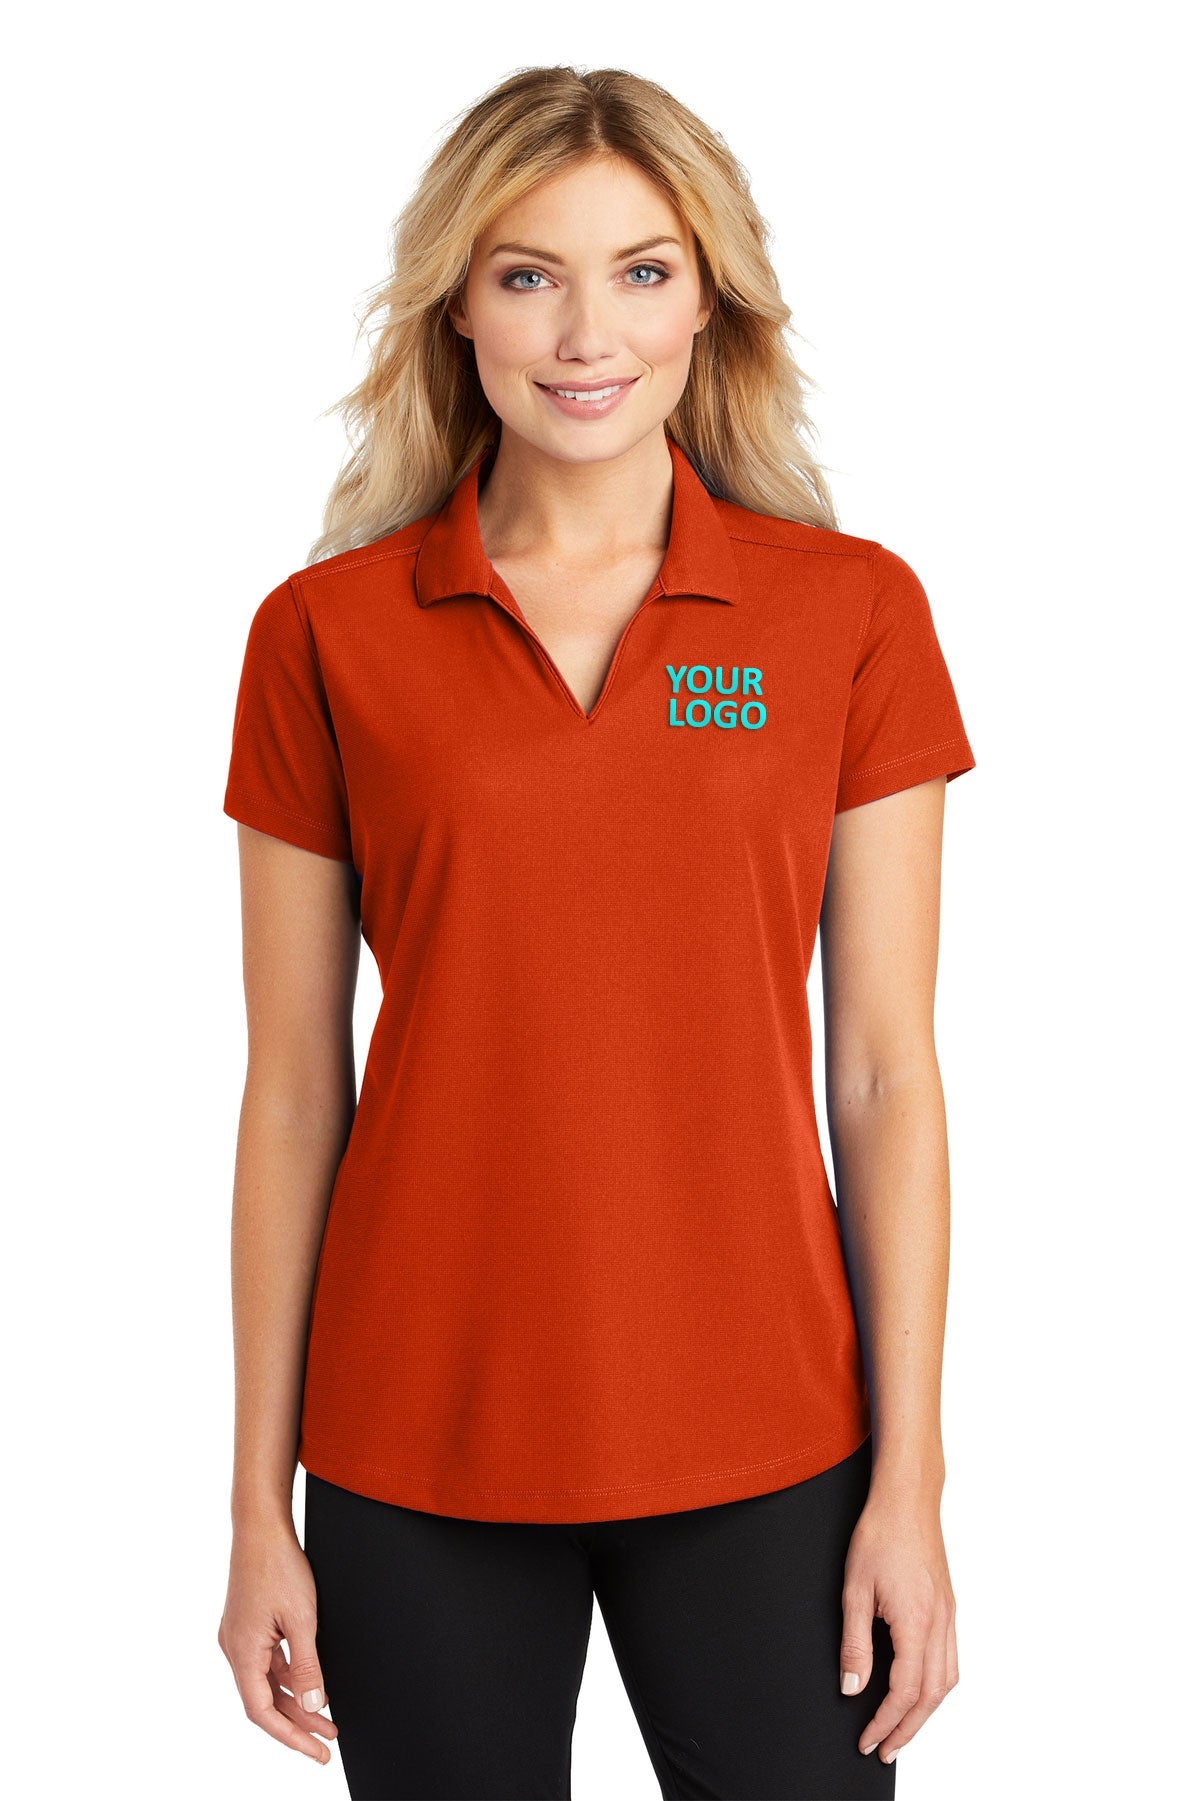 port authority autumn orange l572 custom logo polo shirts embroidered